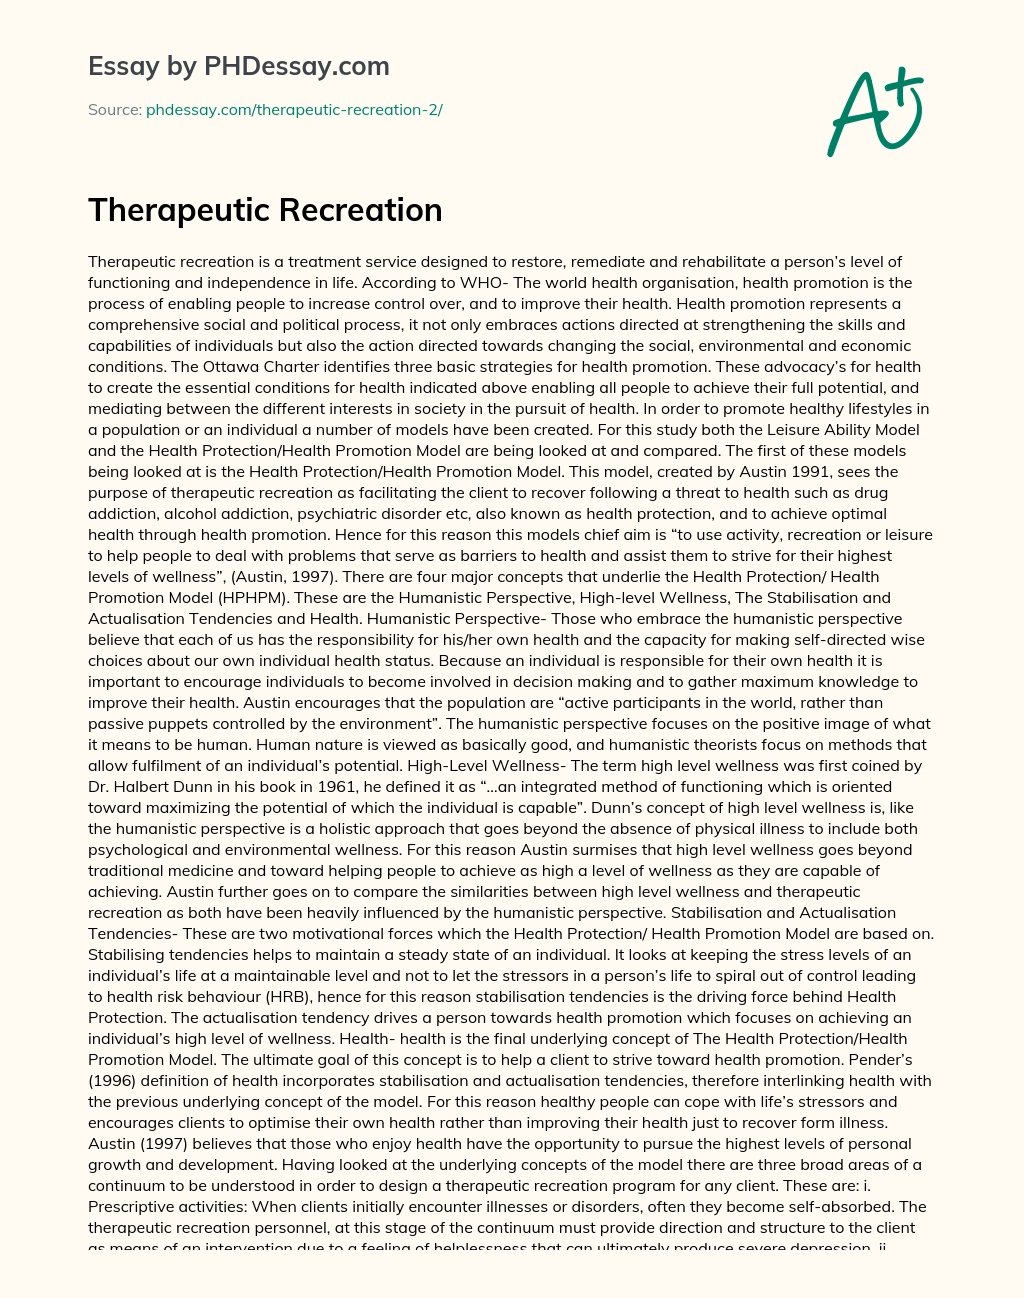 Therapeutic Recreation essay